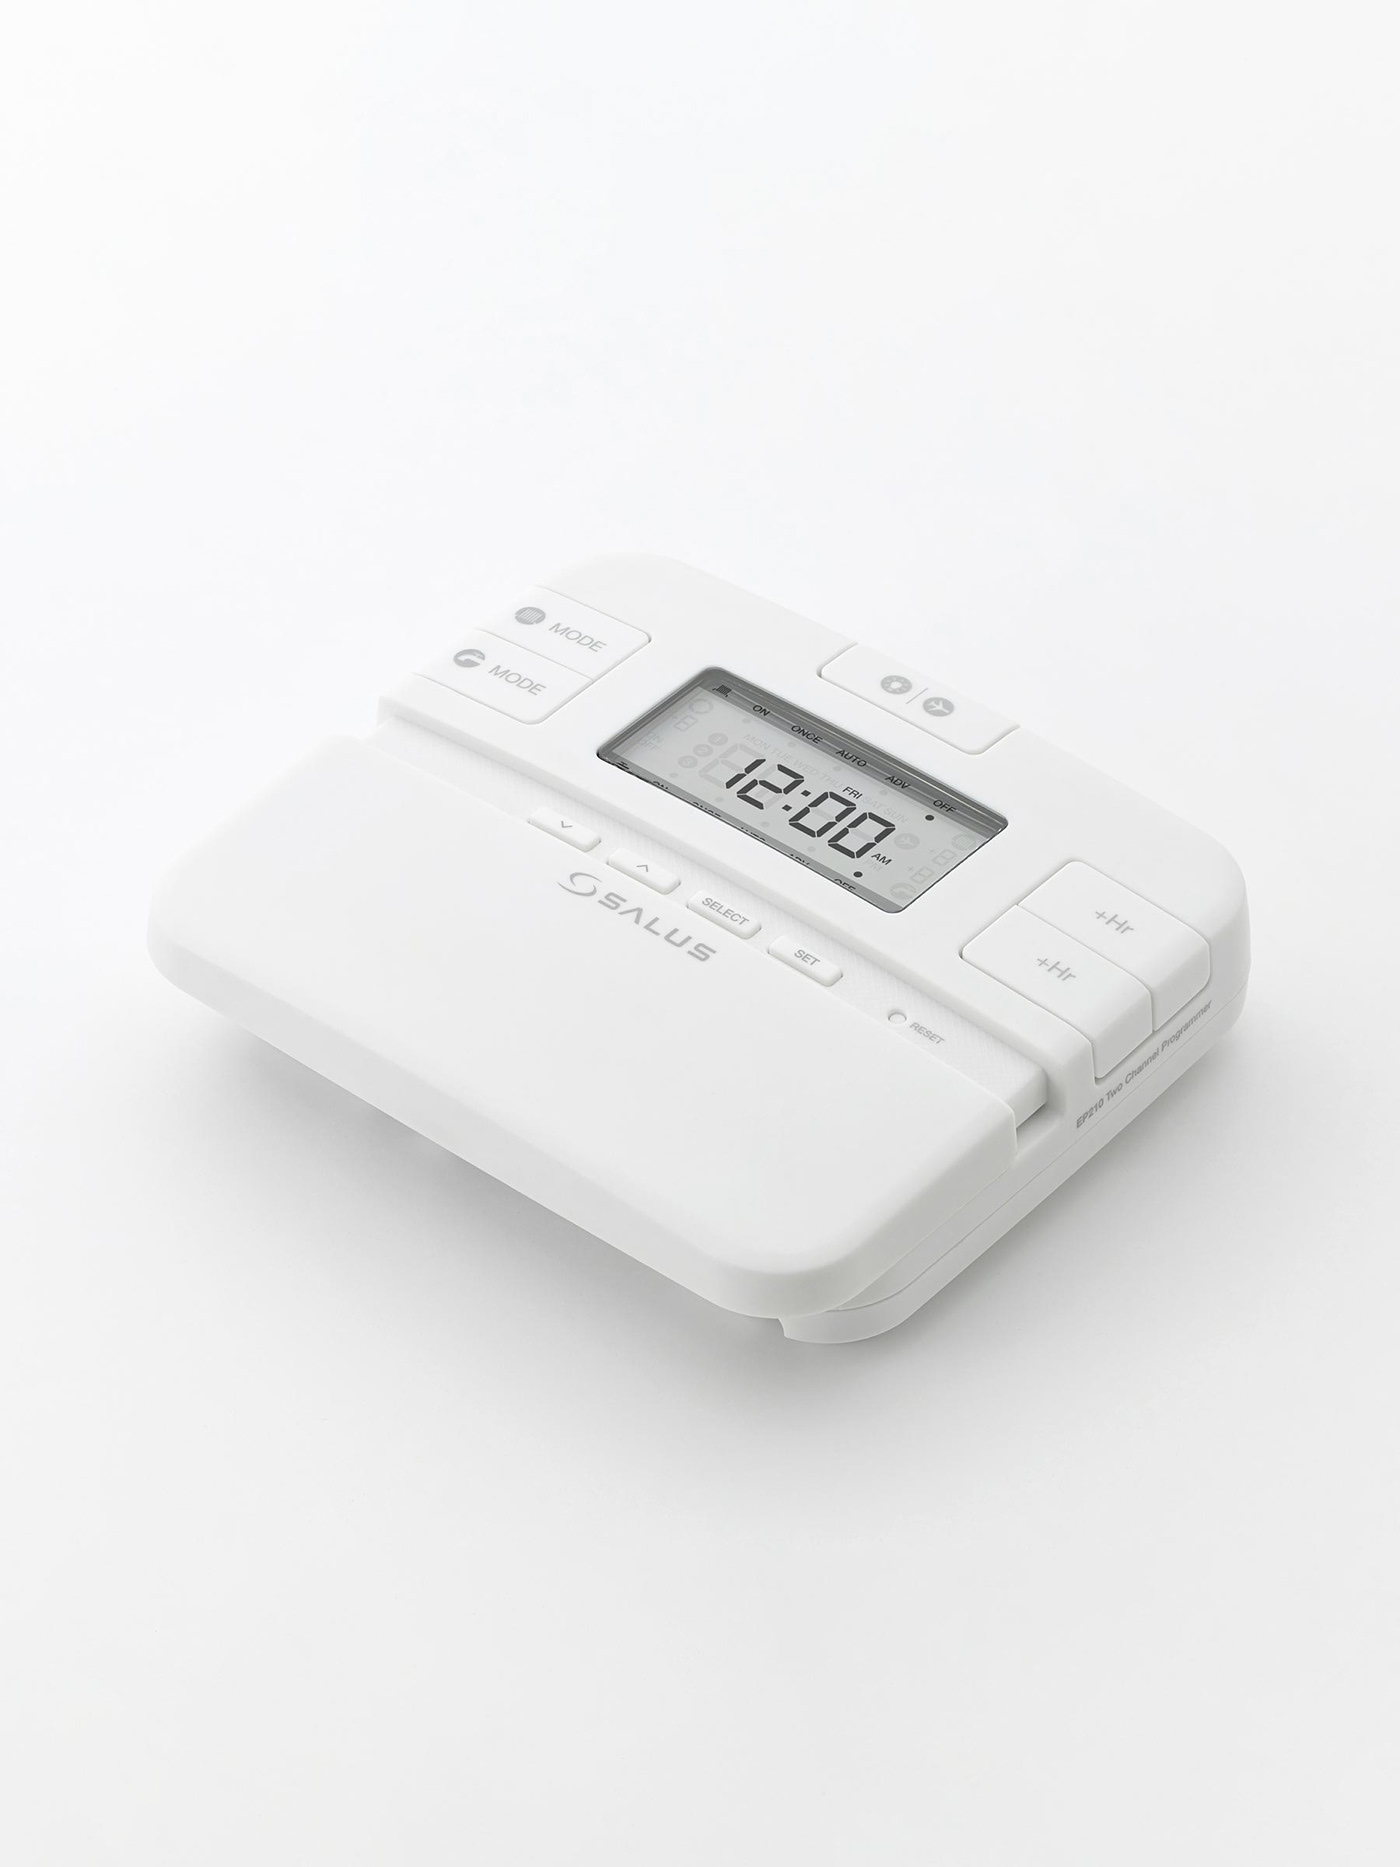 Salus thermostat programmer device temperature Electronics minimal UI